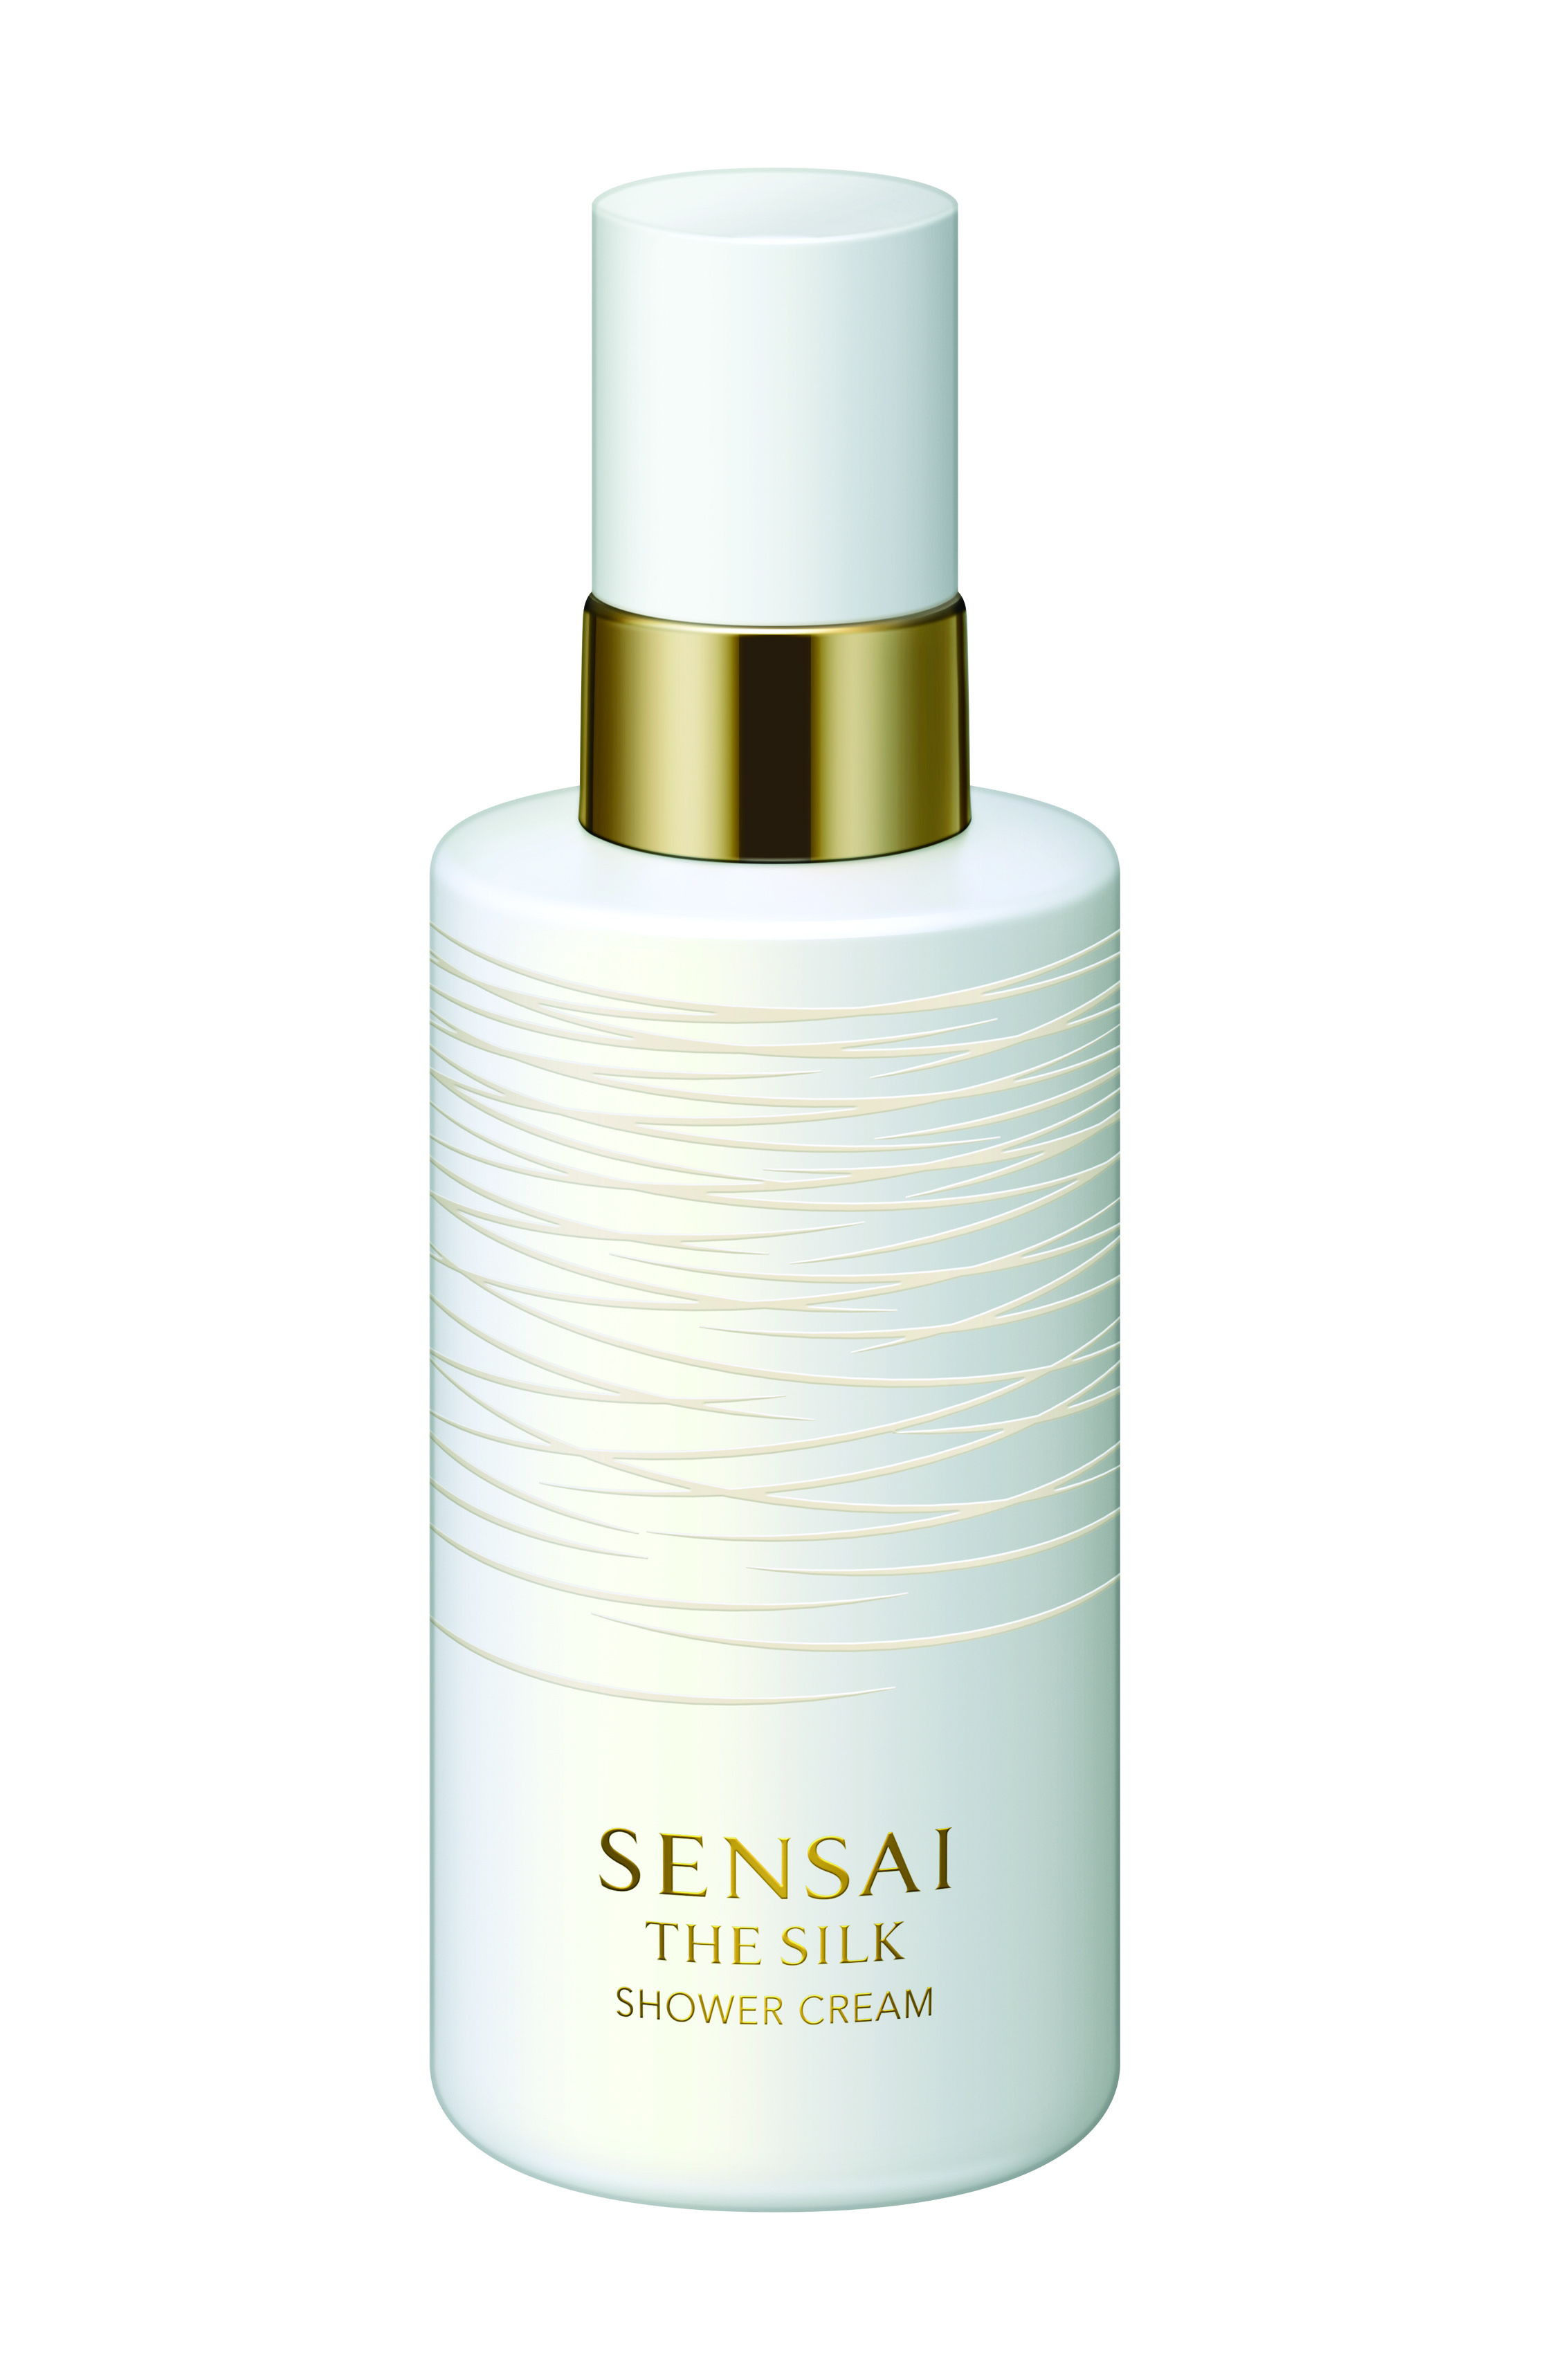 Sensai The Silk Shower Cream